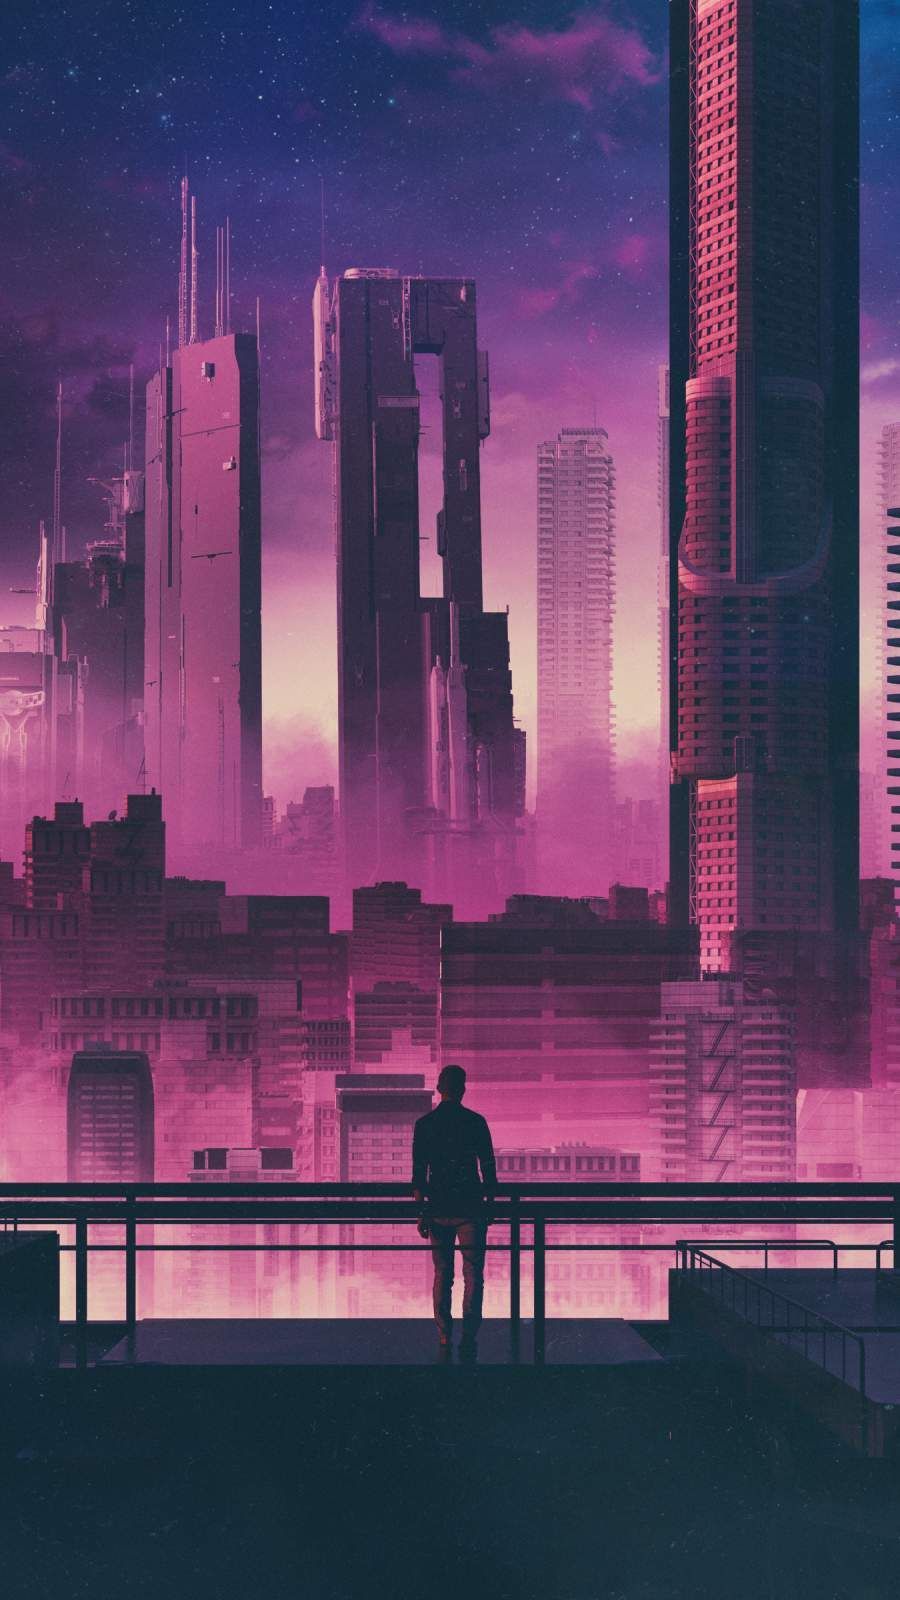 Sunset Scifi City 8K wallpaper download